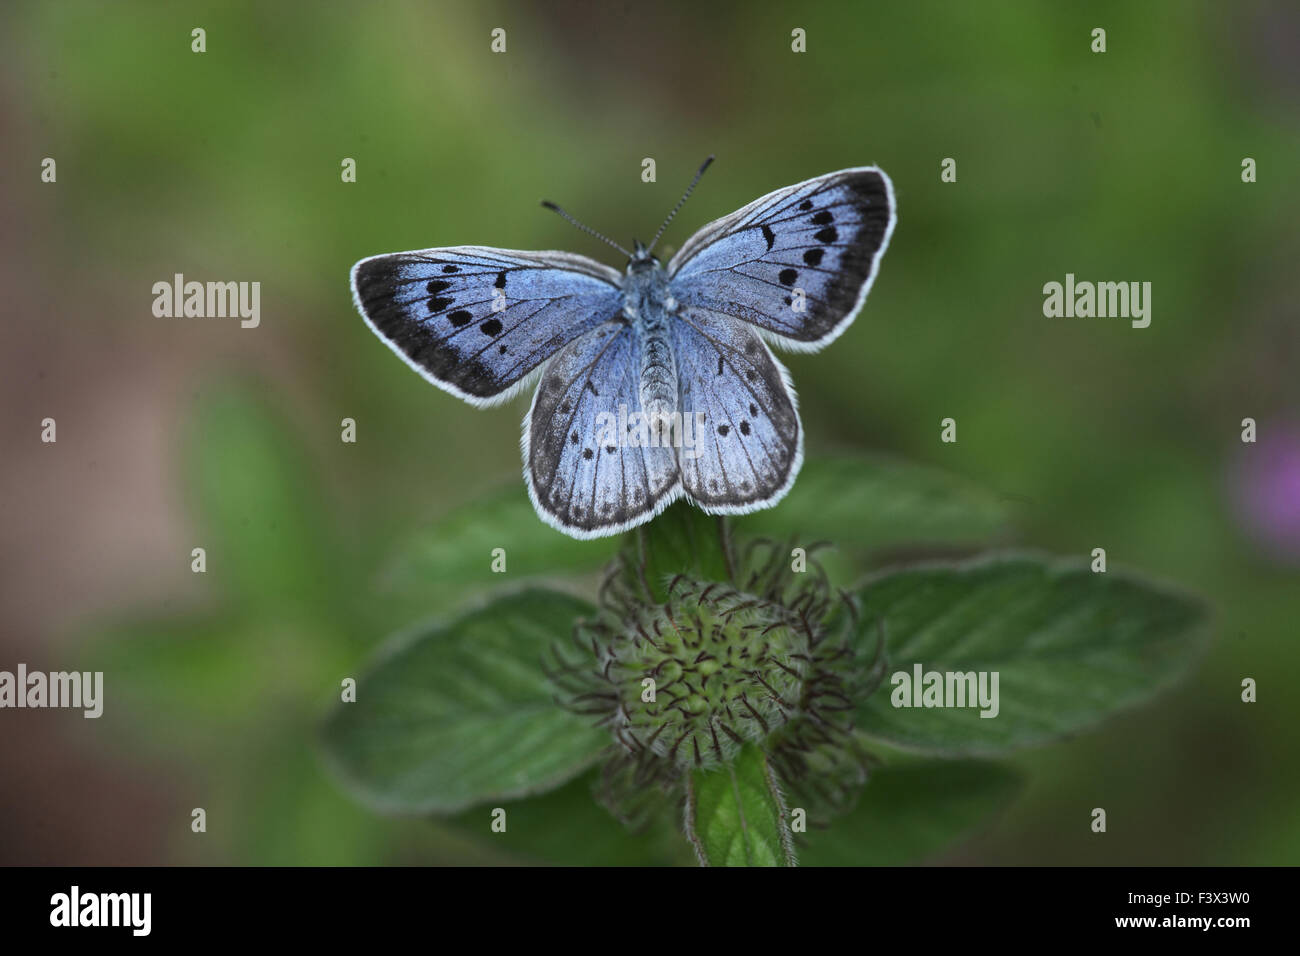 Large blue Female at rest on plant stalk Hungary June 2015 Stock Photo